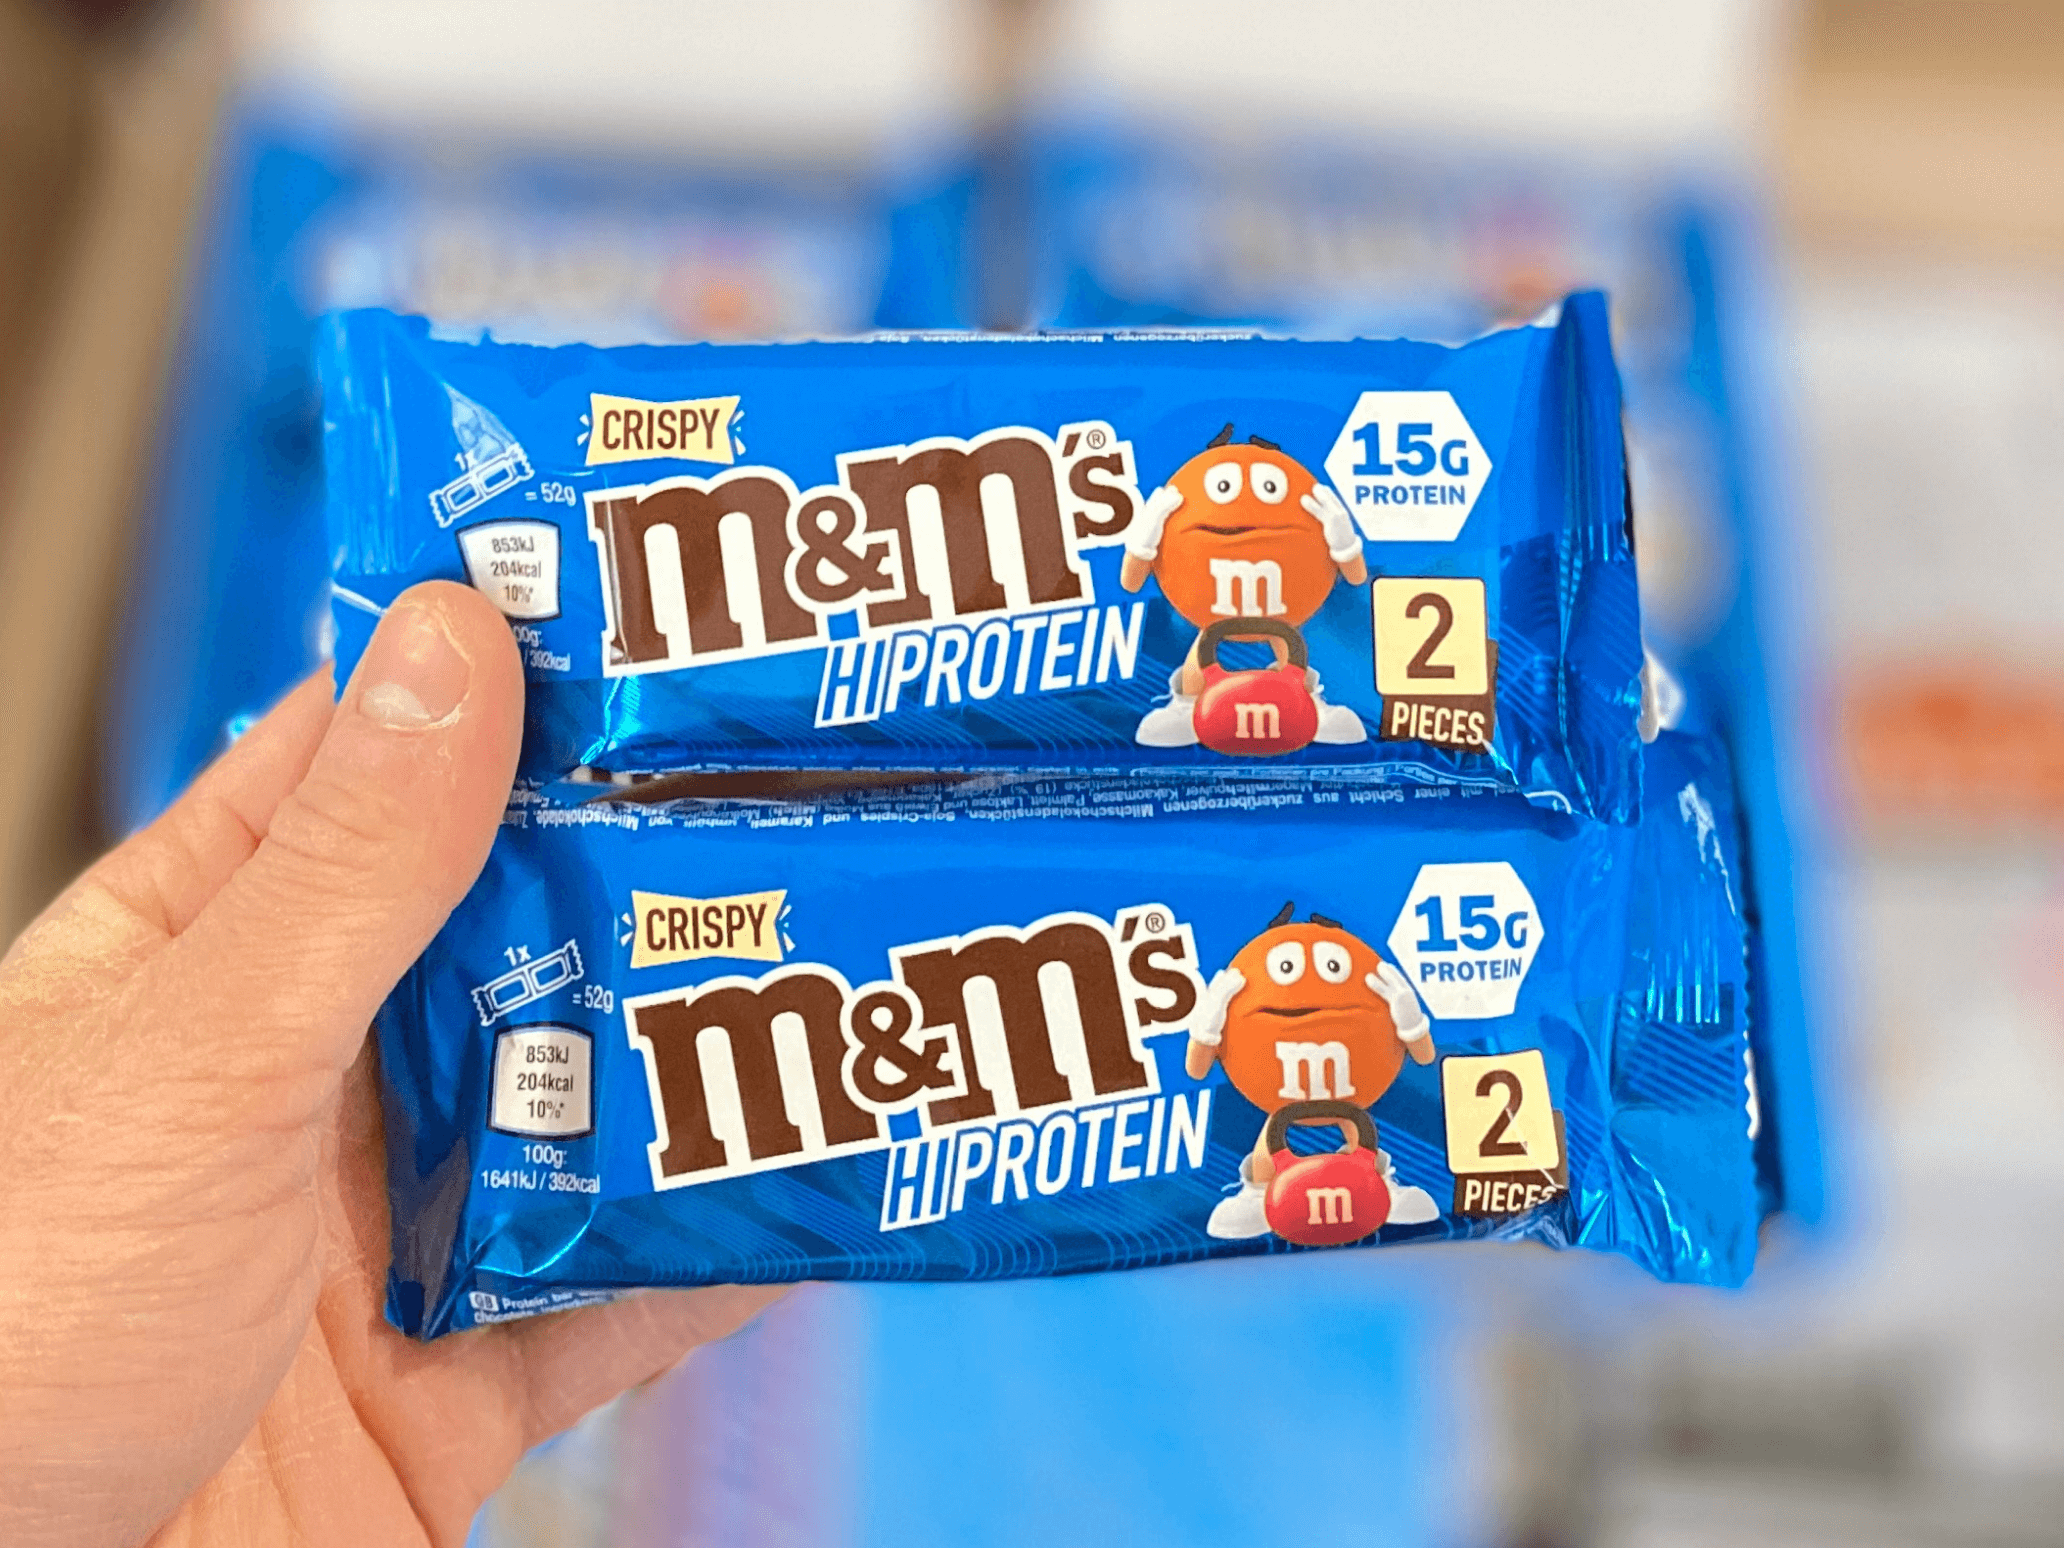 Premiera batona M&M’s HiProtein Crispy!